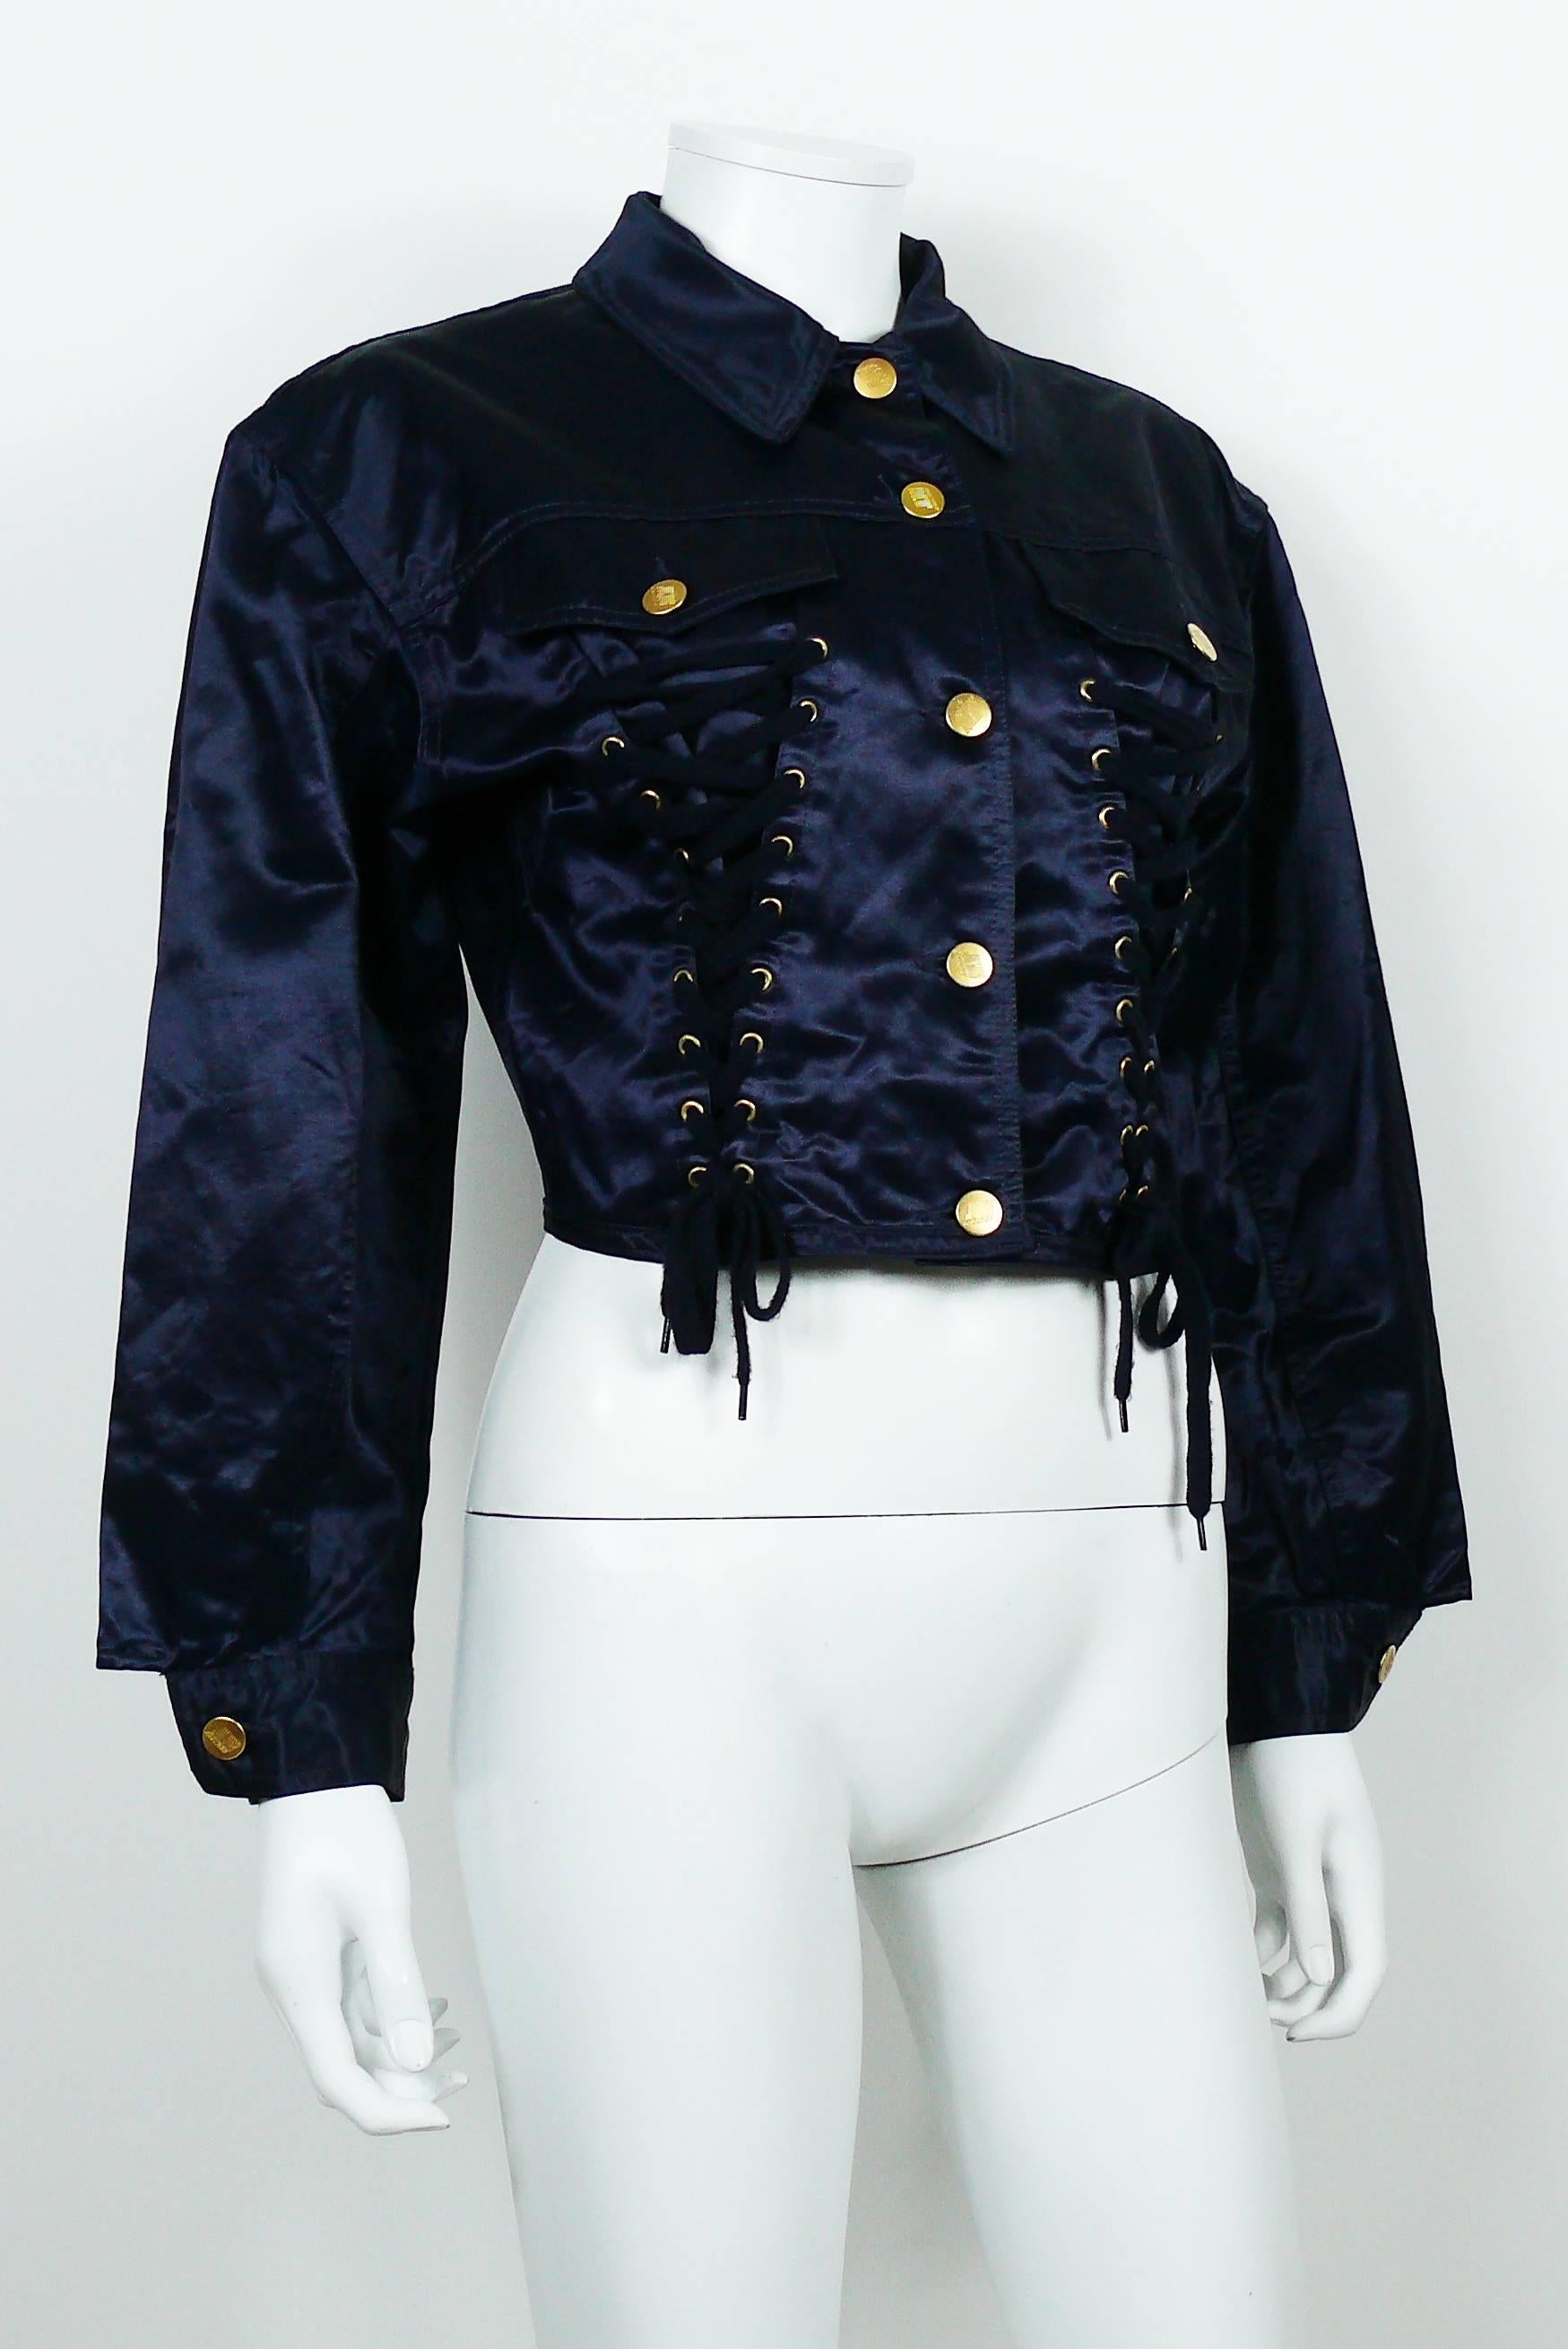 Black Jean Paul Gaultier Junior Vintage Navy Blue Iconic Corset Style Jacket